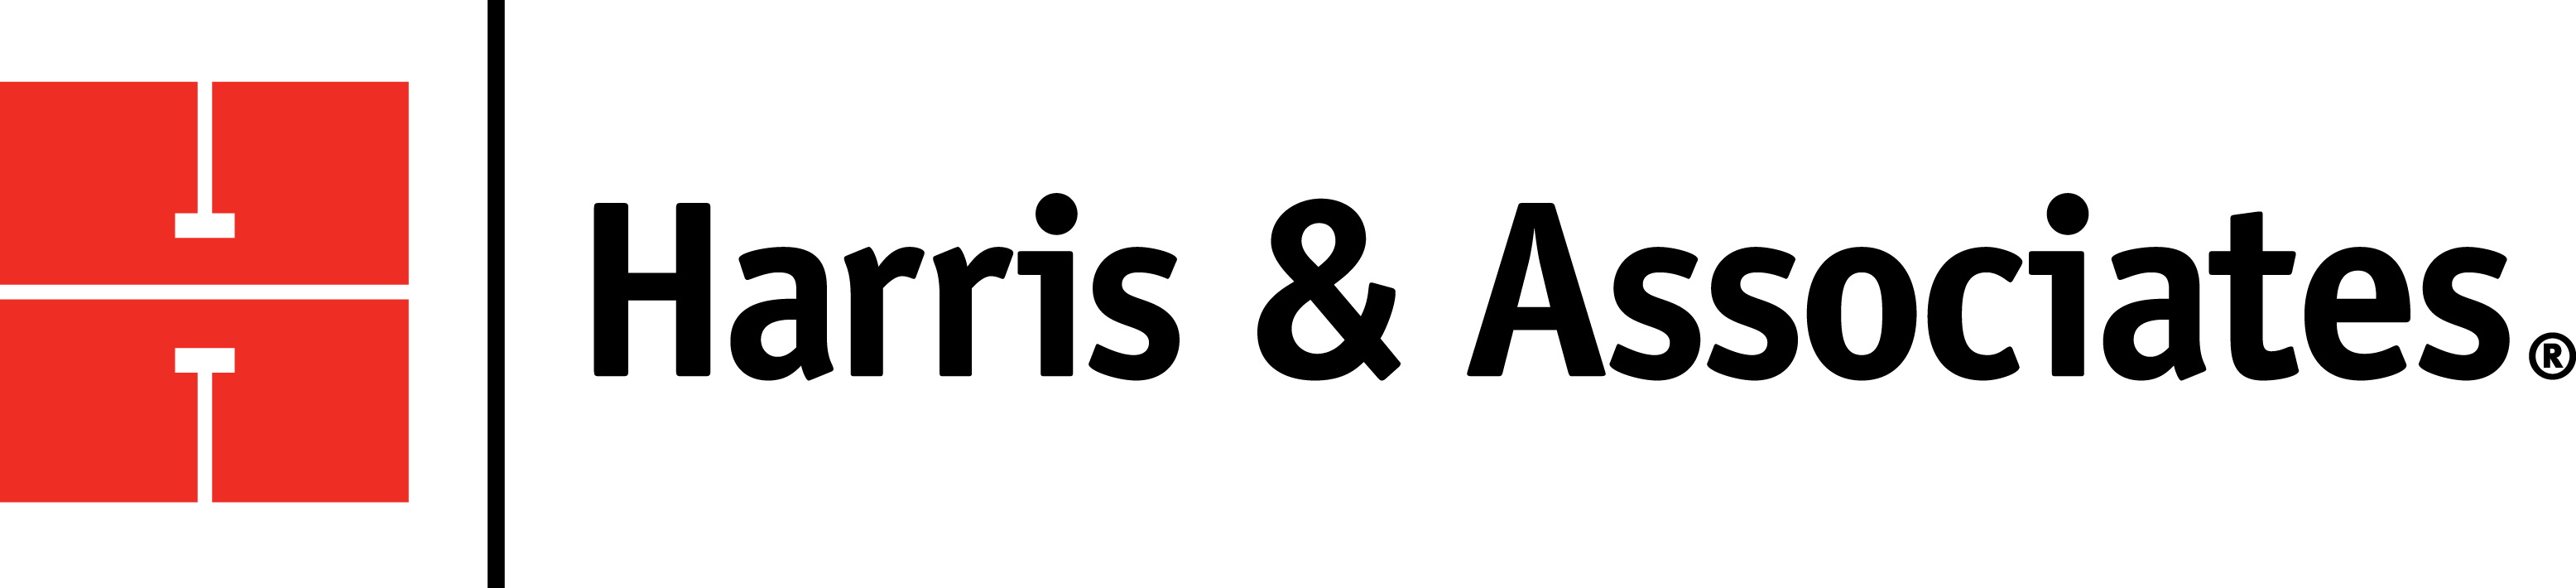 harris and associates logo